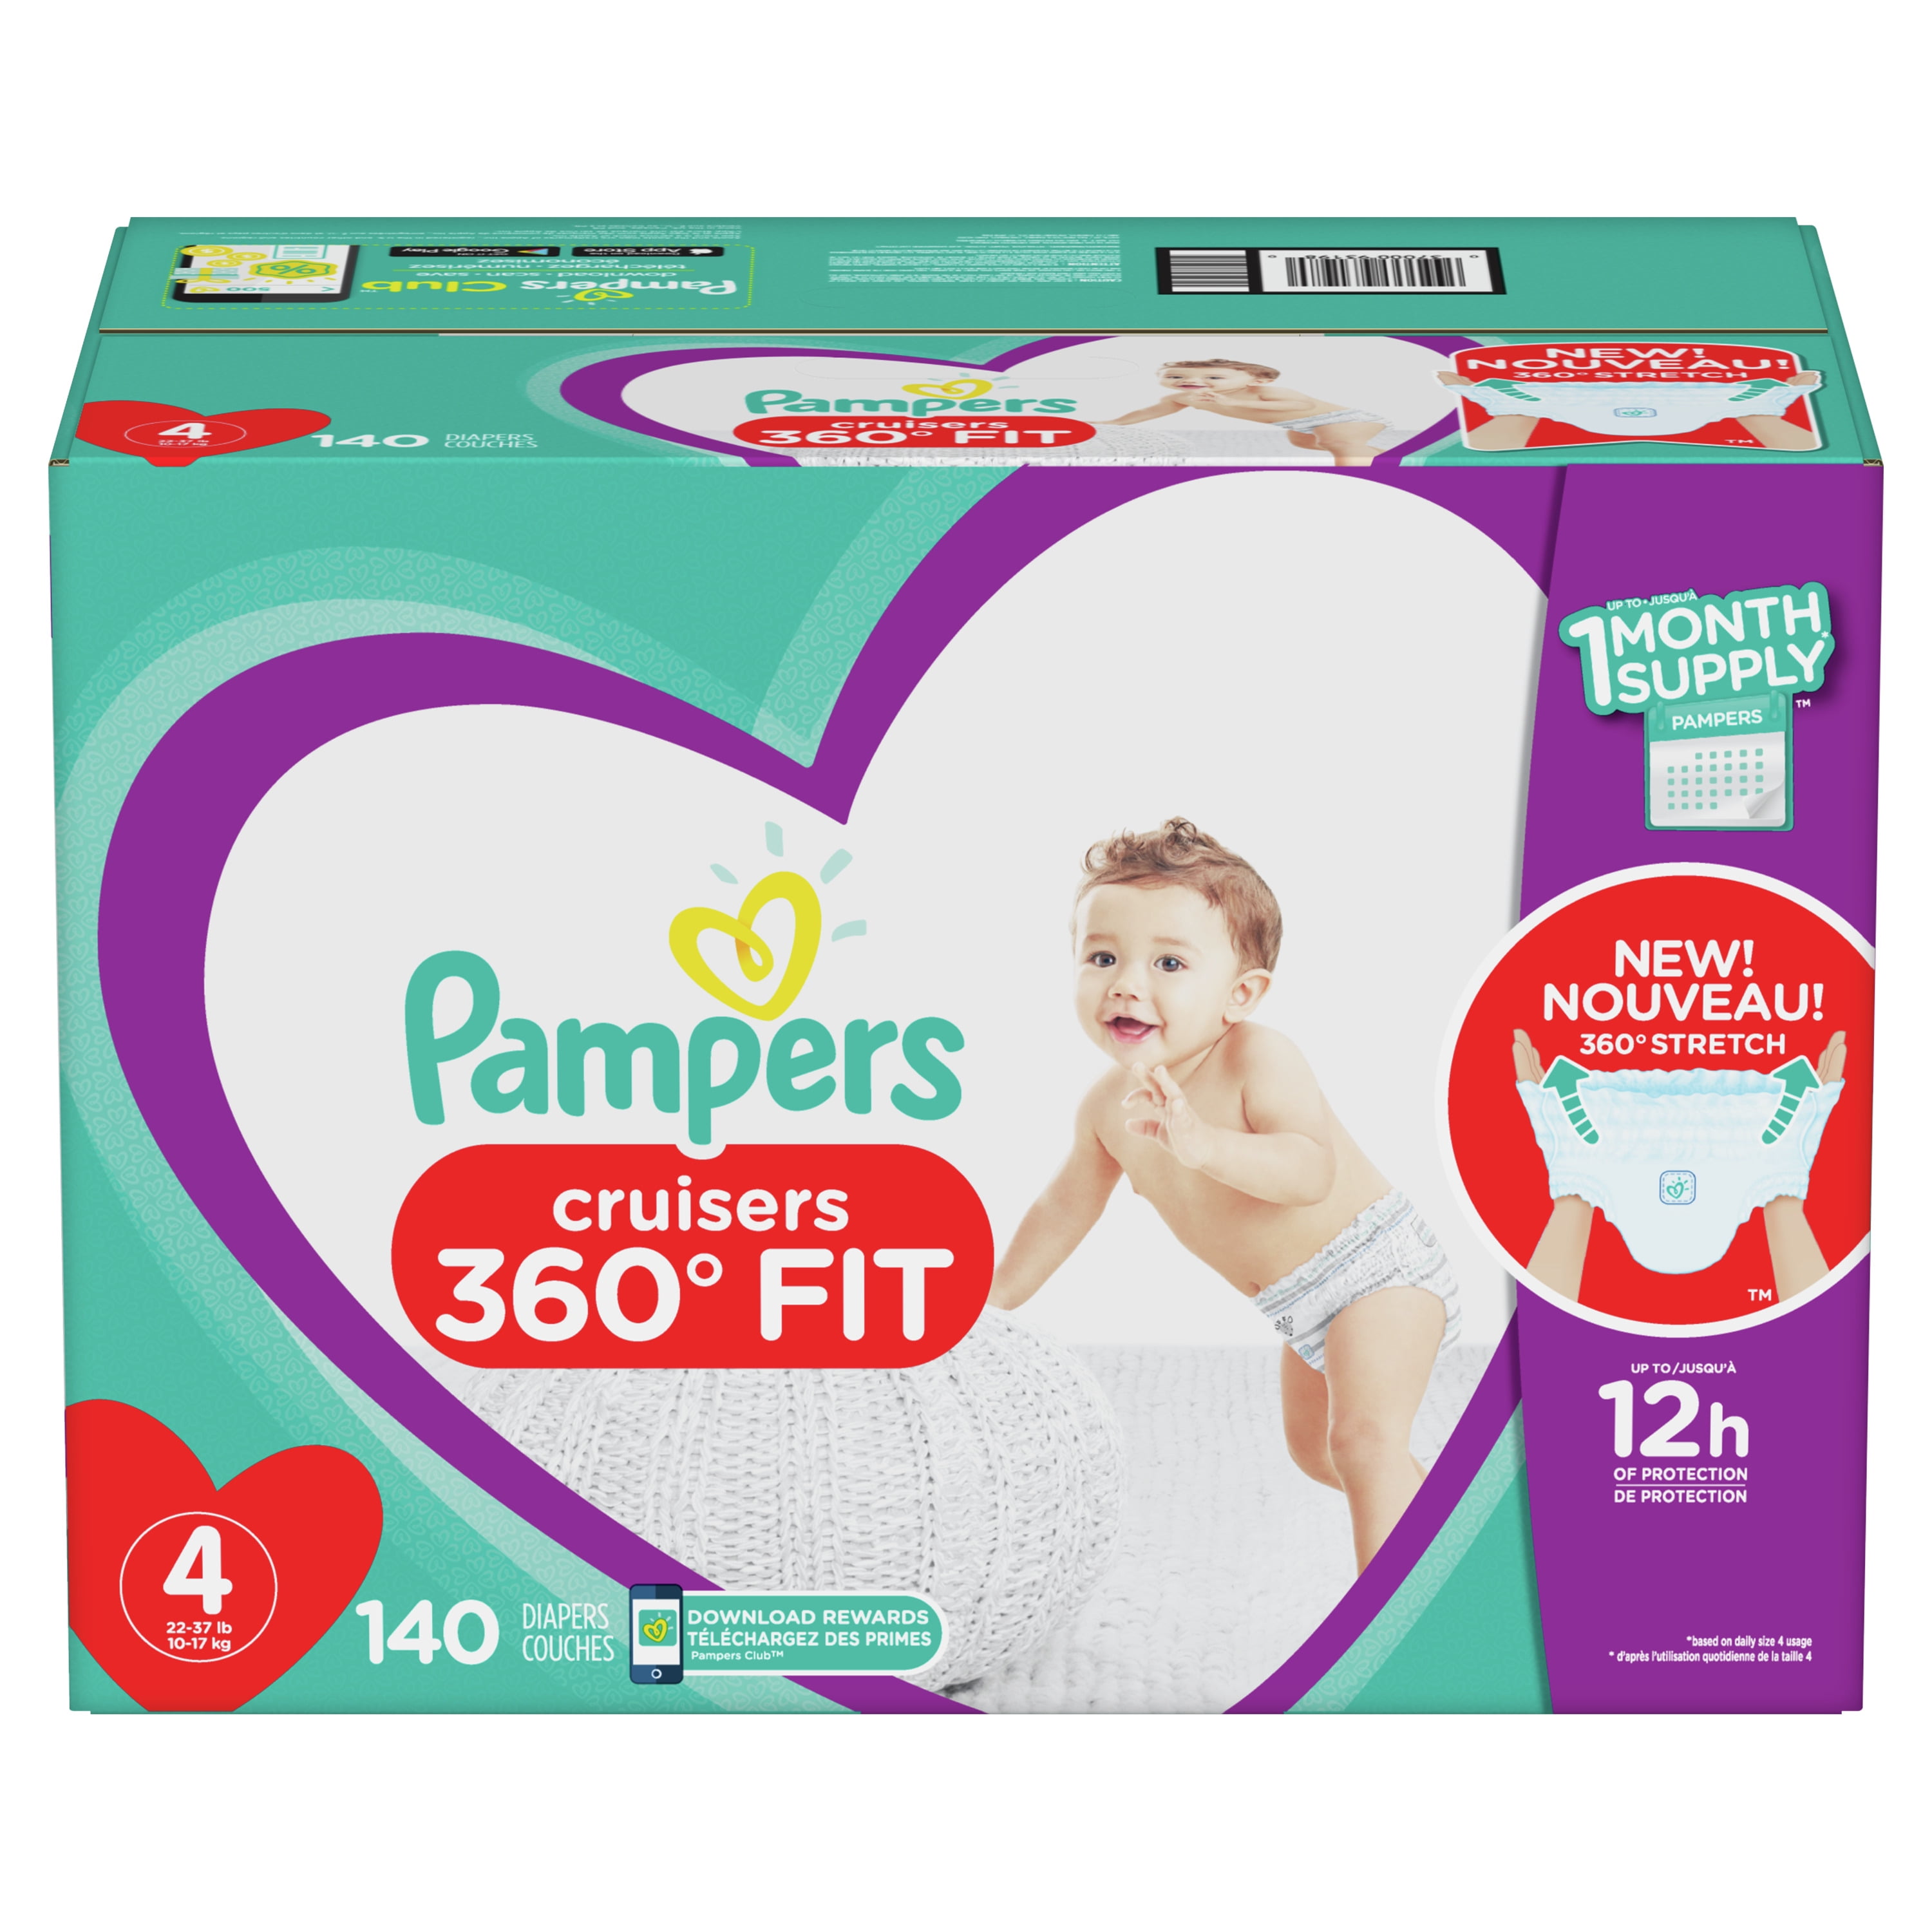 Pampers Cruisers Fit Diapers Active Comfort Size Count Walmart Com Walmart Com